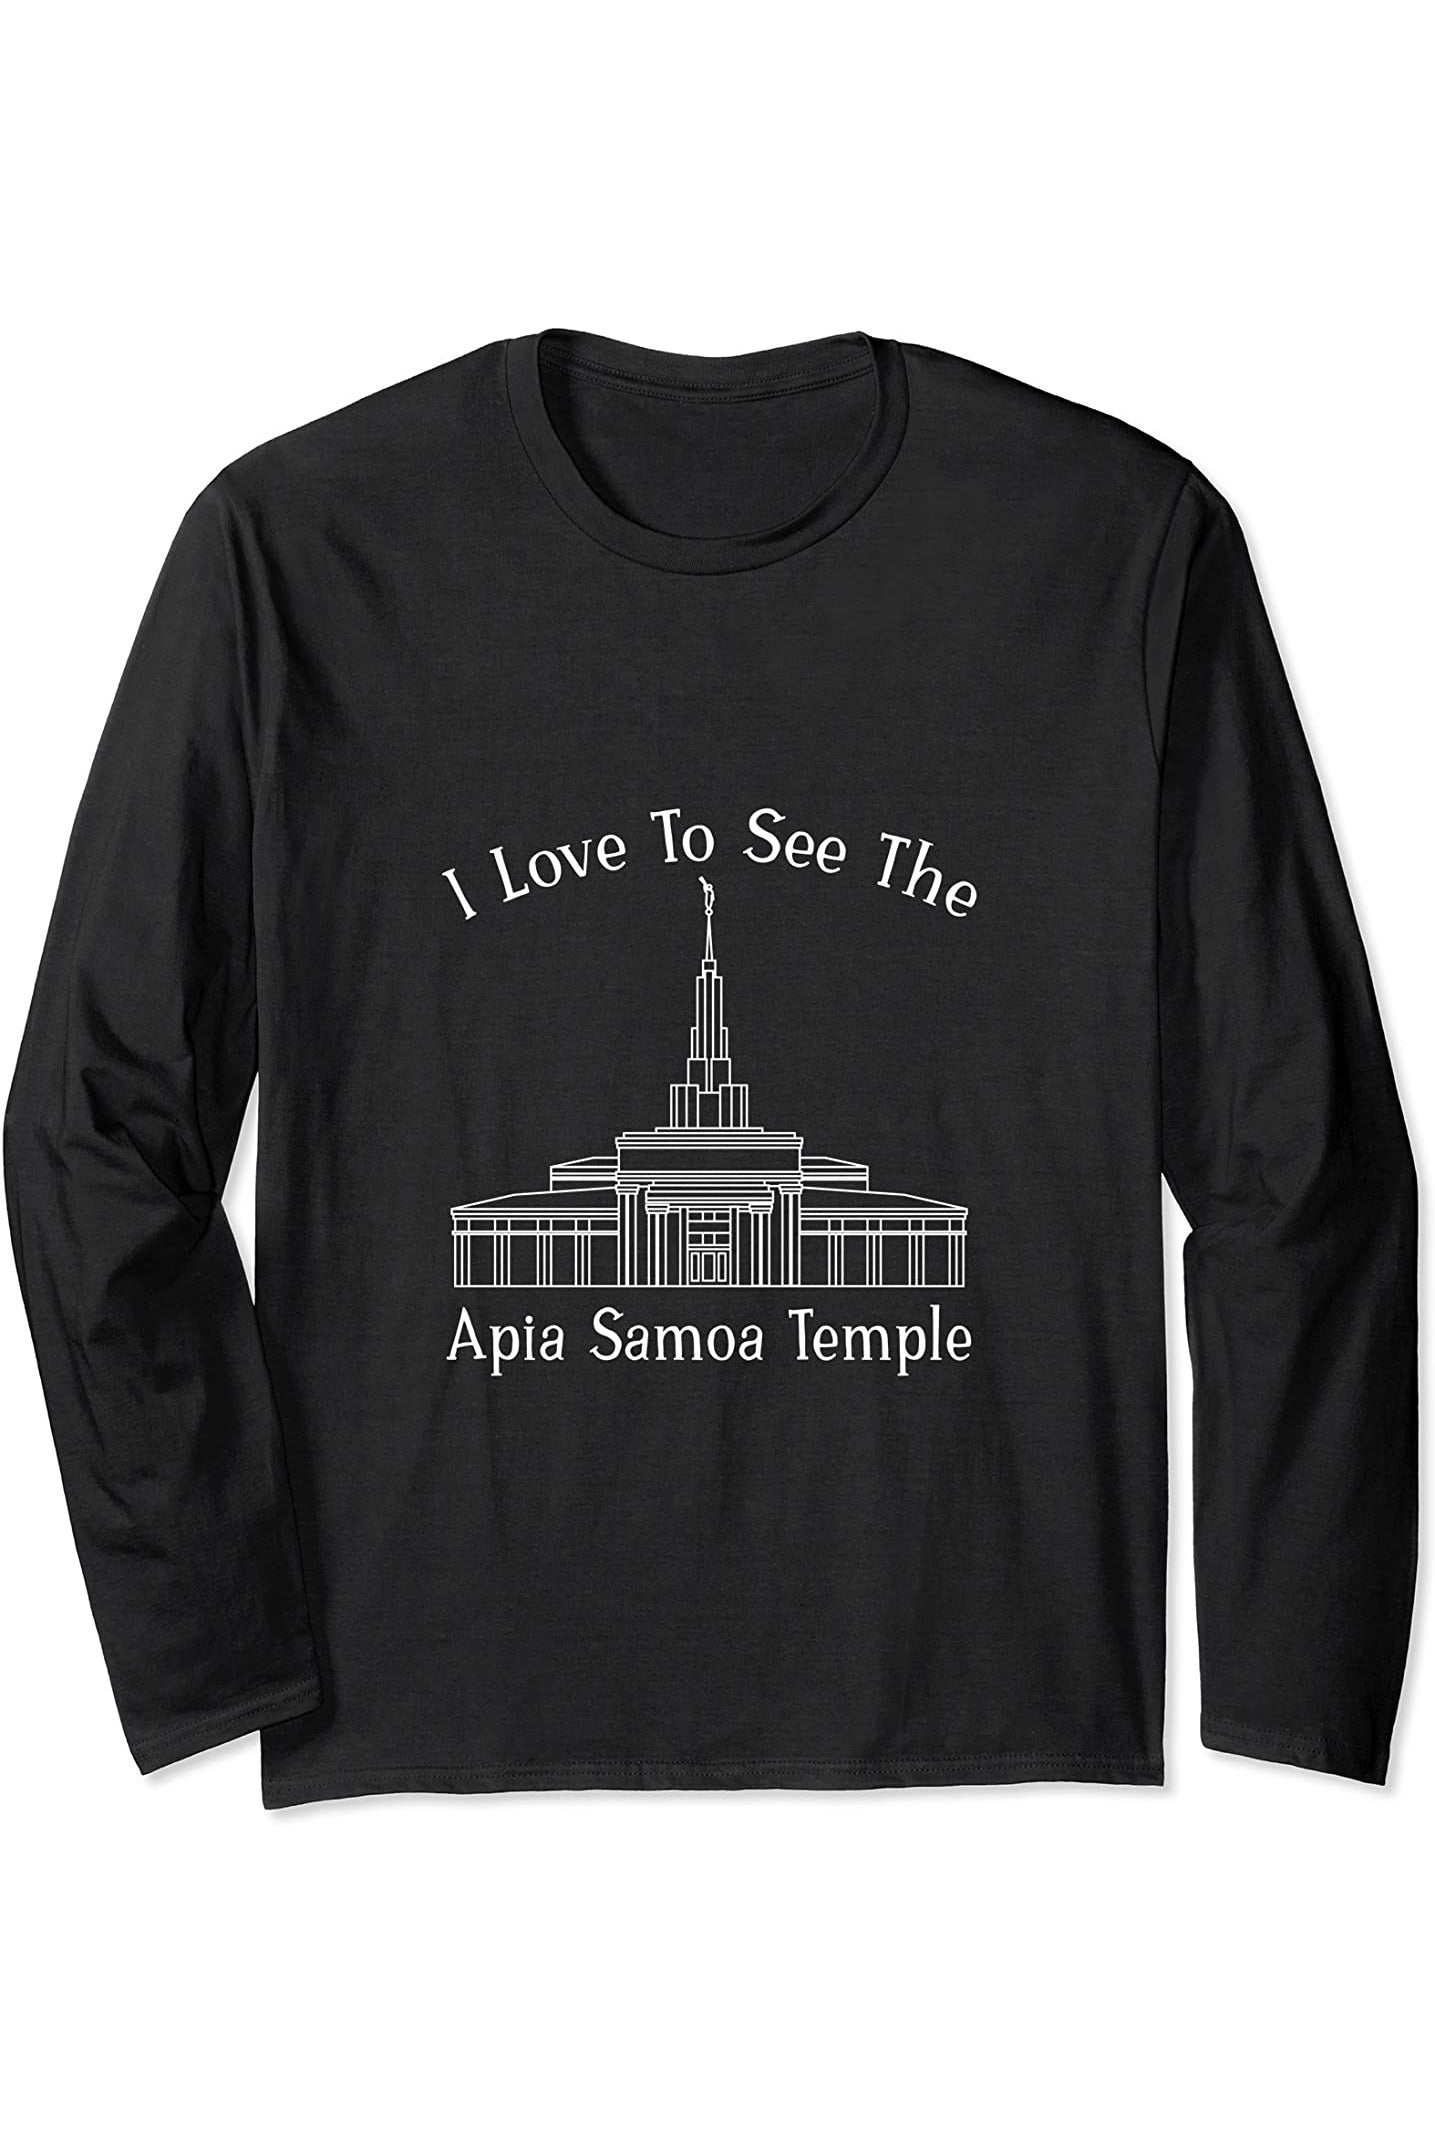 Apia Samoa Temple Long Sleeve T-Shirt - Happy Style (English) US